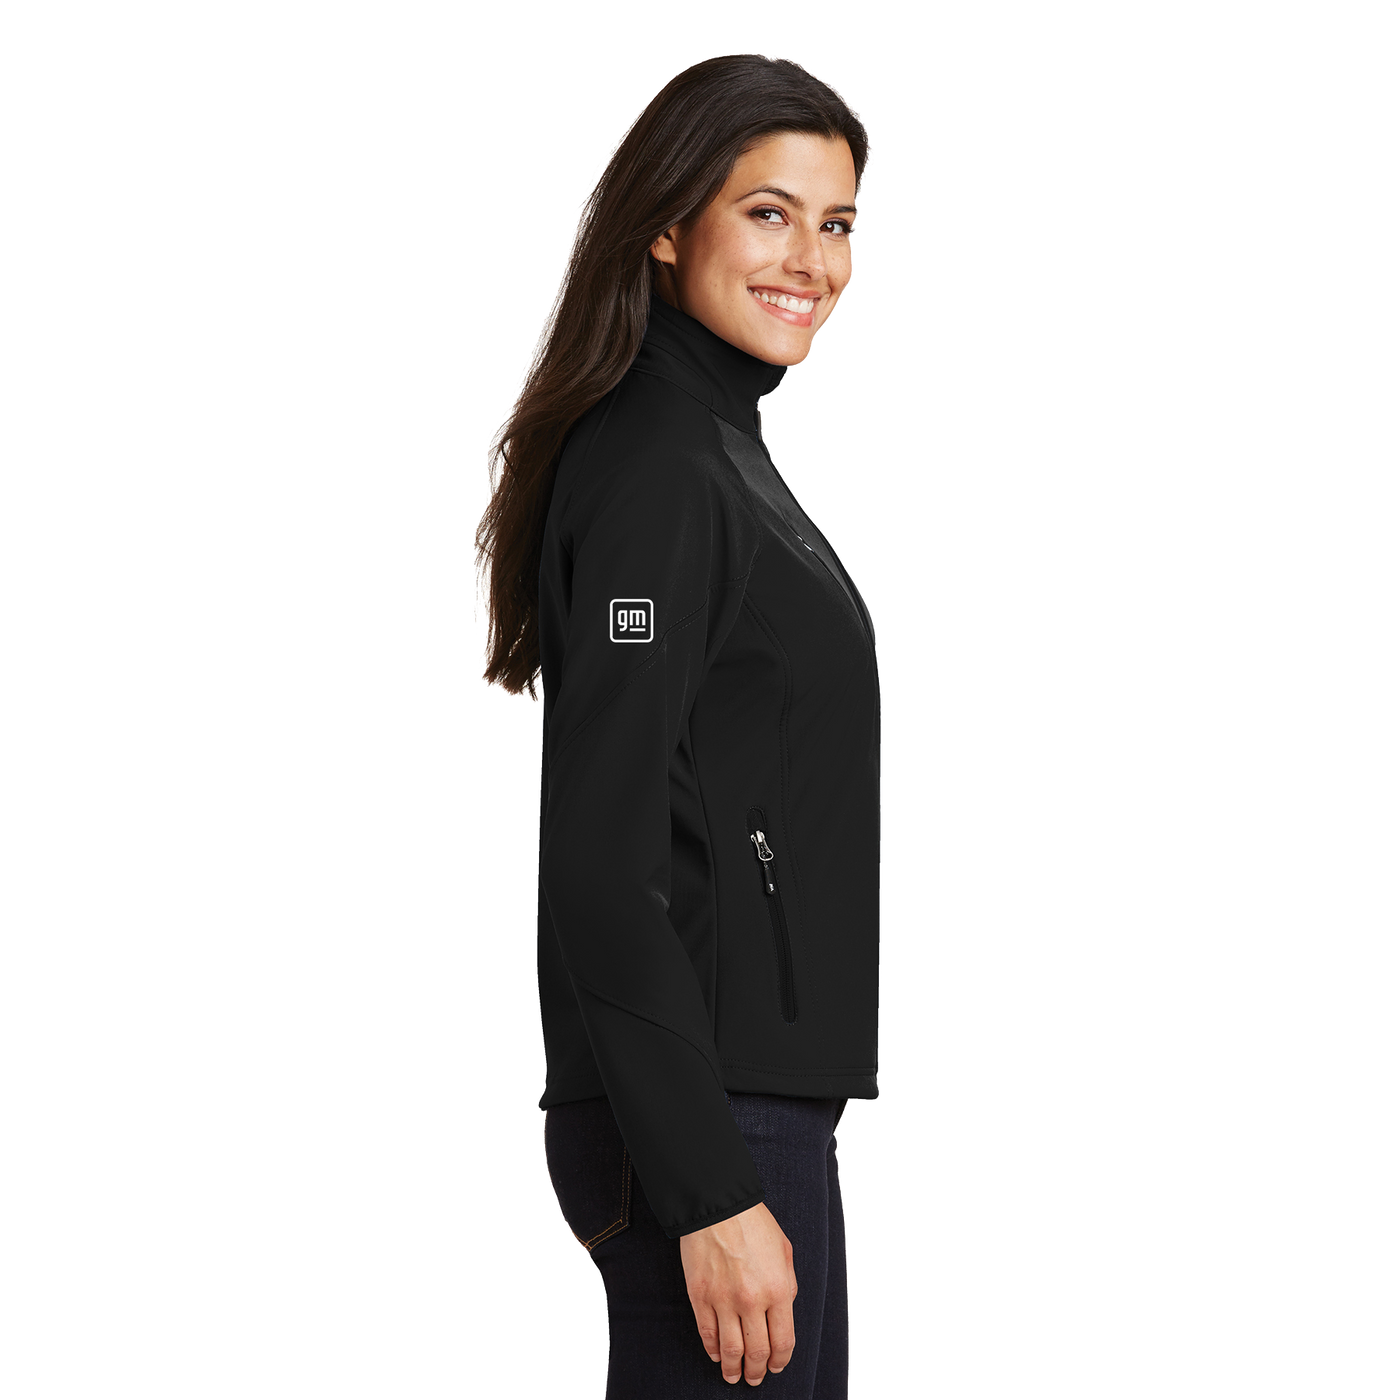 GM EVerybody in. Women's Port Authority Jacket